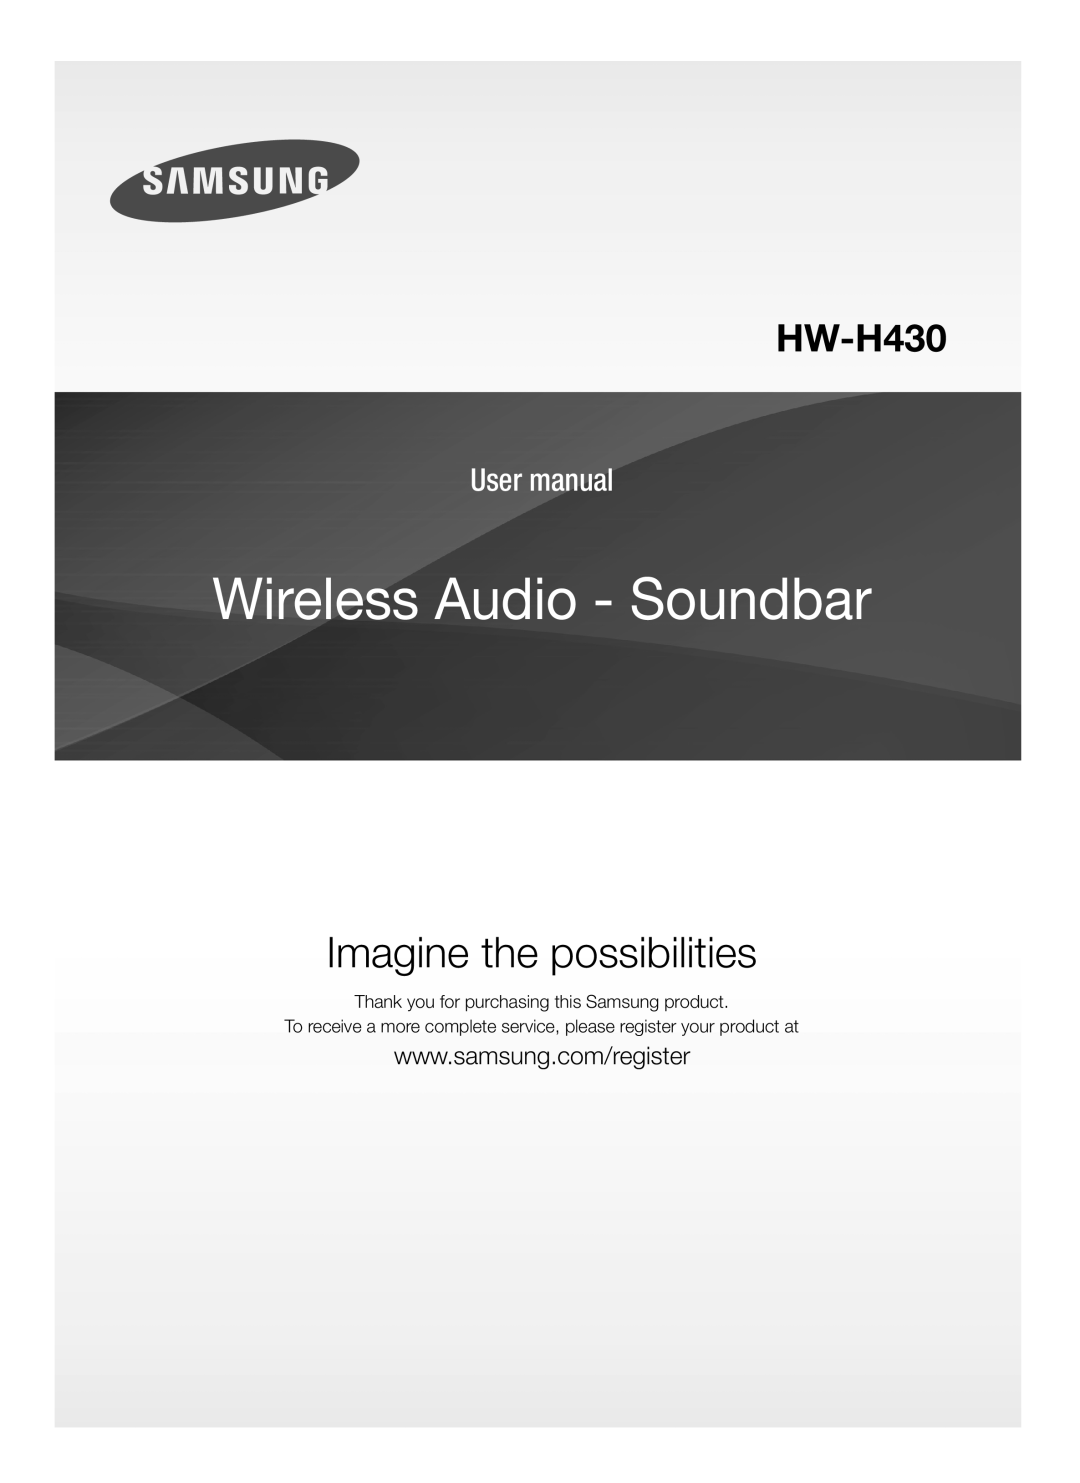 Samsung HW-H430/EN manual Thank you for purchasing this Samsung product, Wireless Audio - Soundbar, User manual 